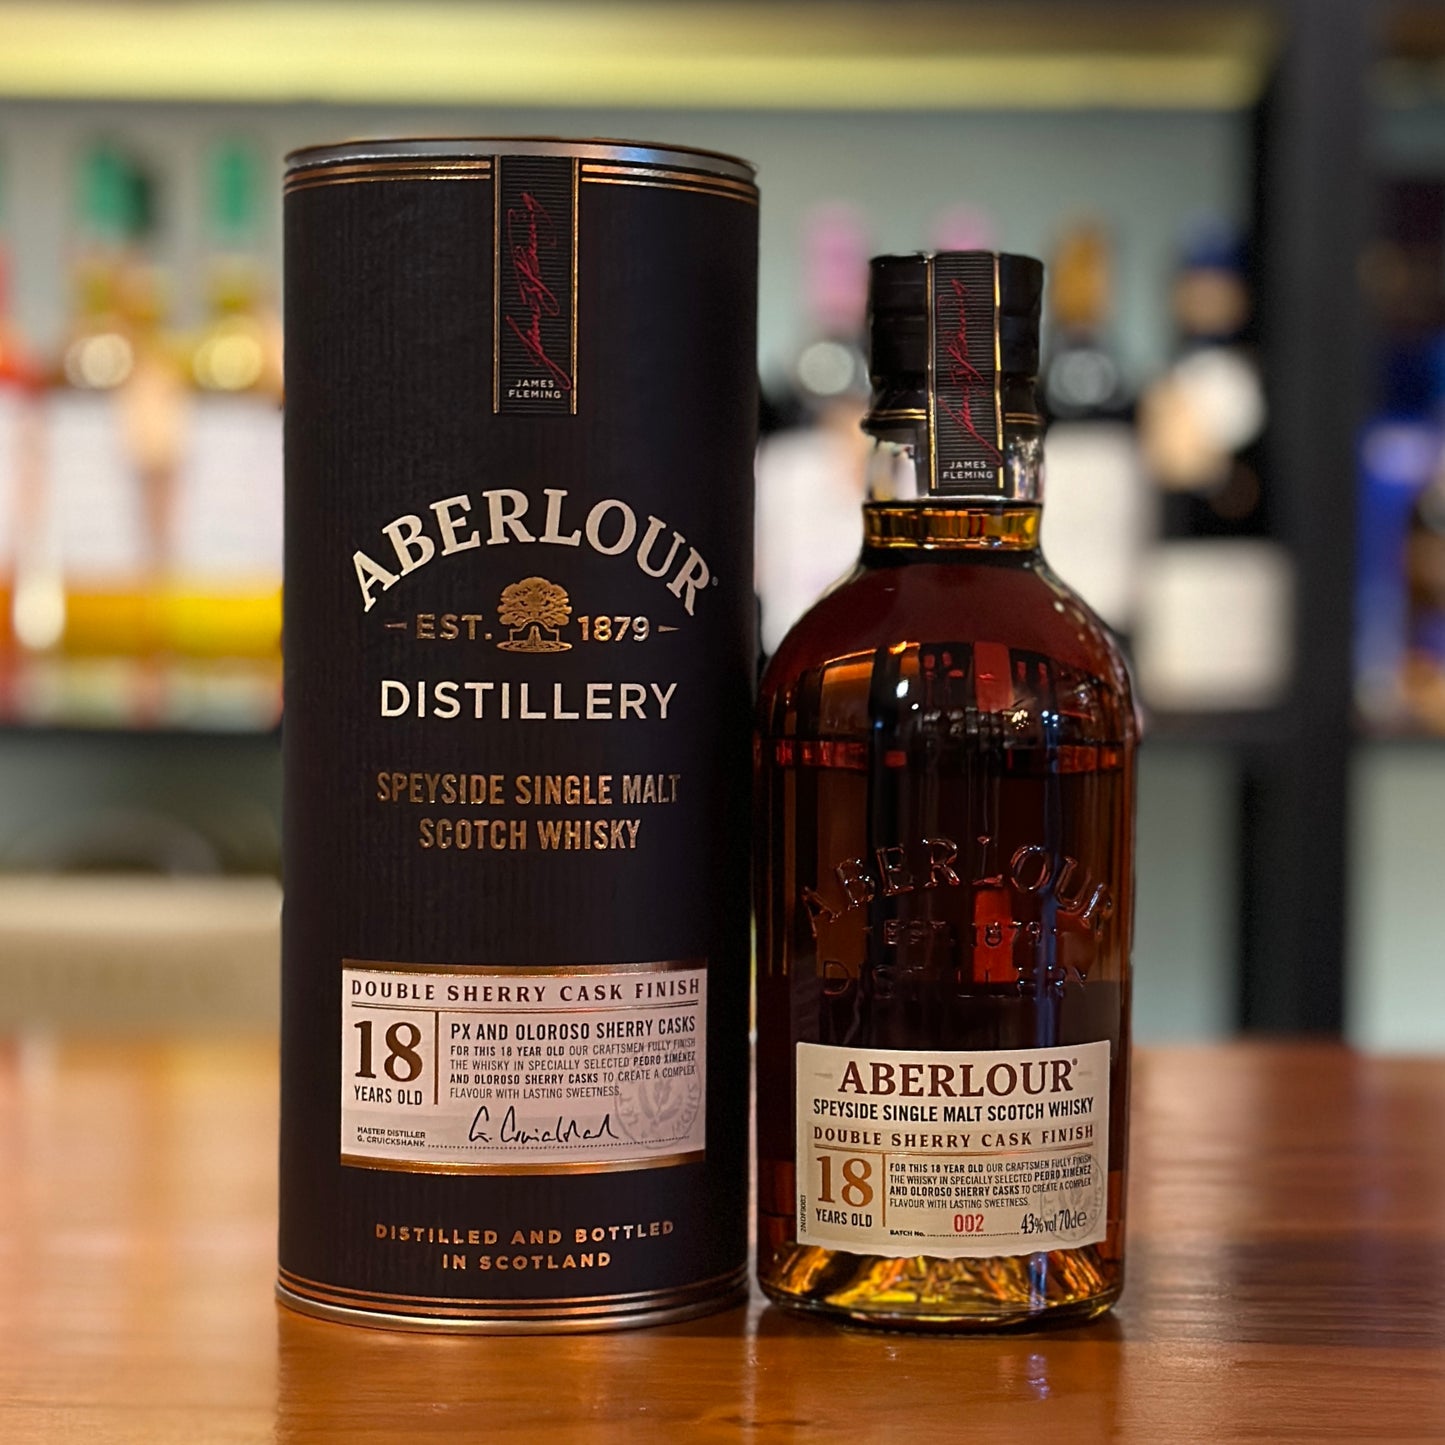 Aberlour 18 Year Old Double Sherry Cask Finish Single Malt Scotch Whisky (Batch 002)